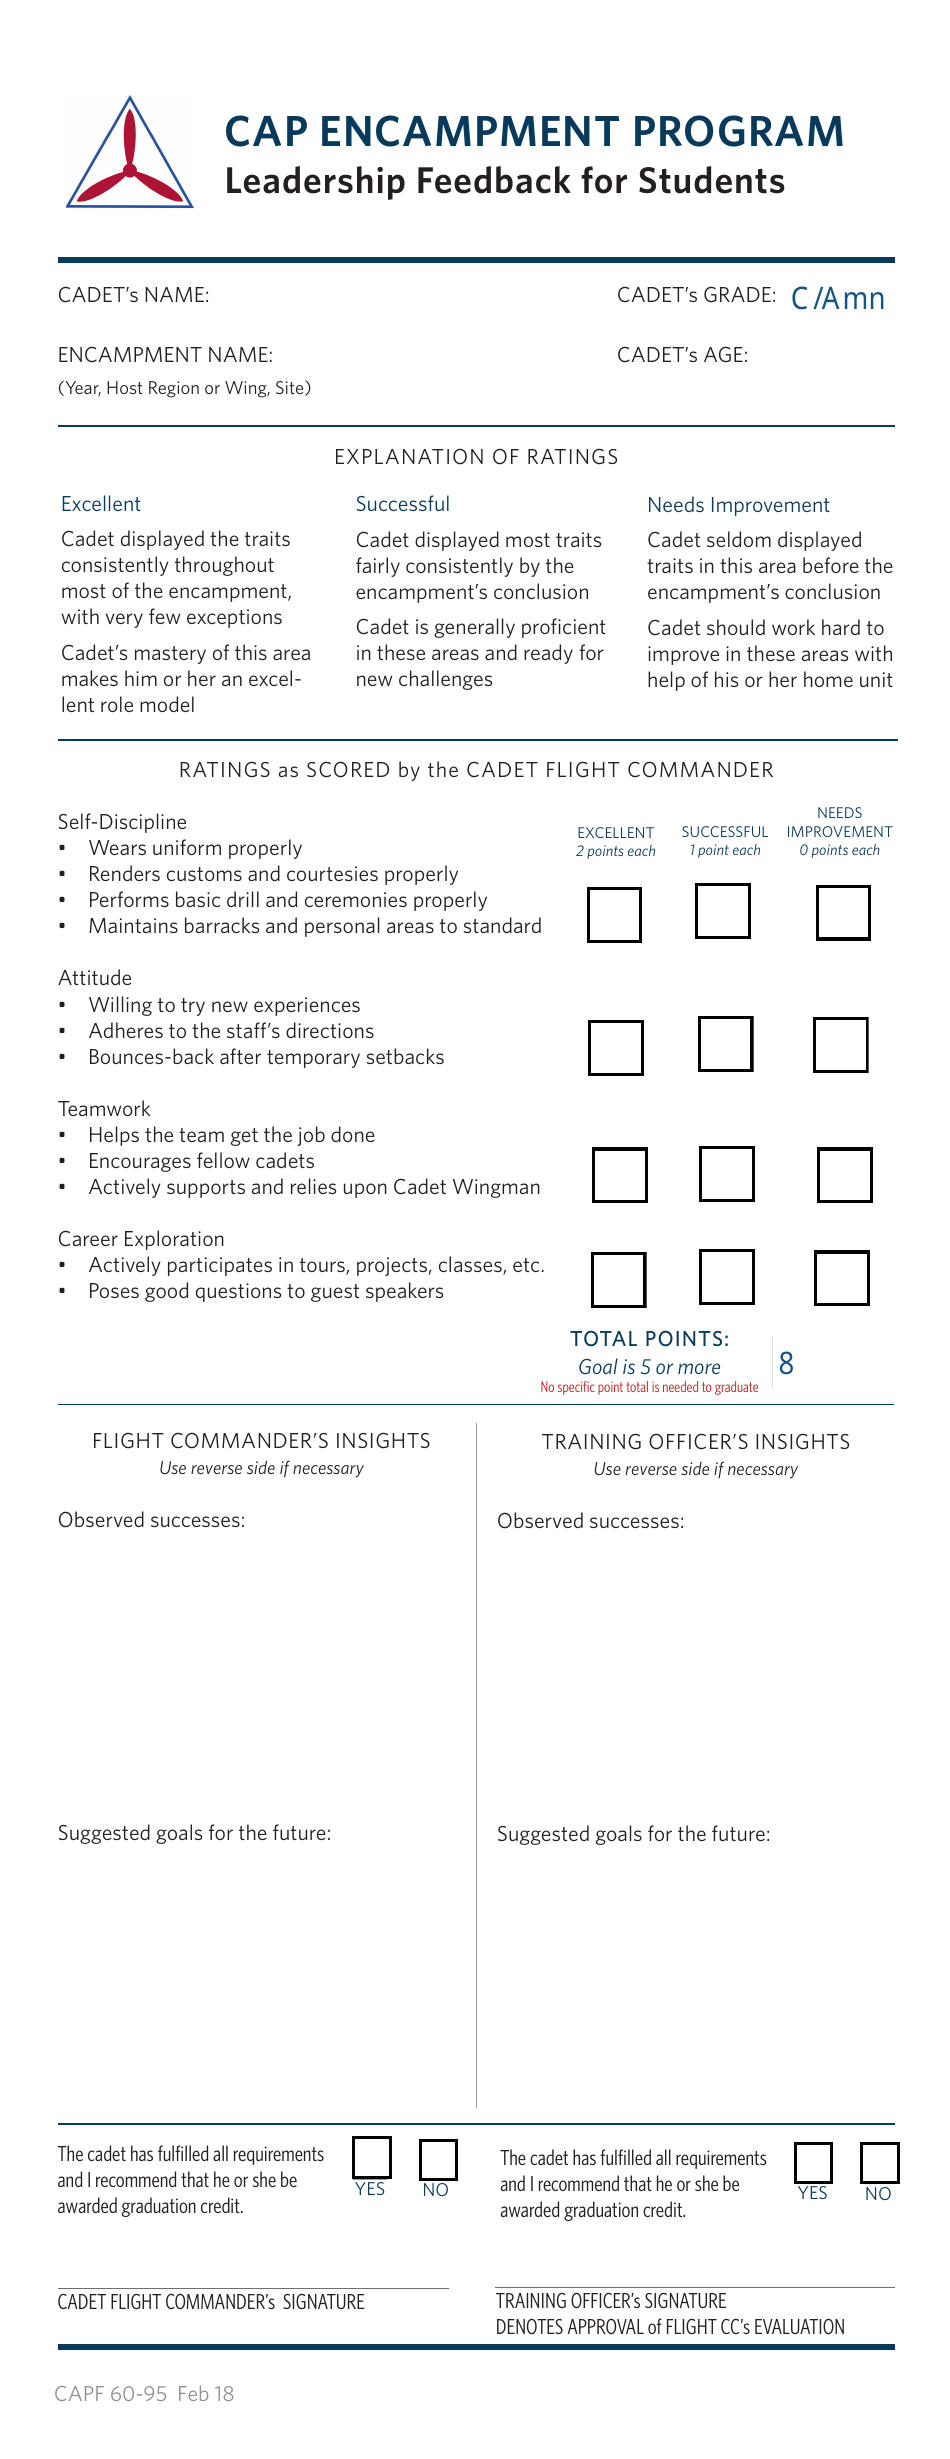 CAP Form 60-95 CAP Encampment Program - Leadership Feedback for Students, Page 1